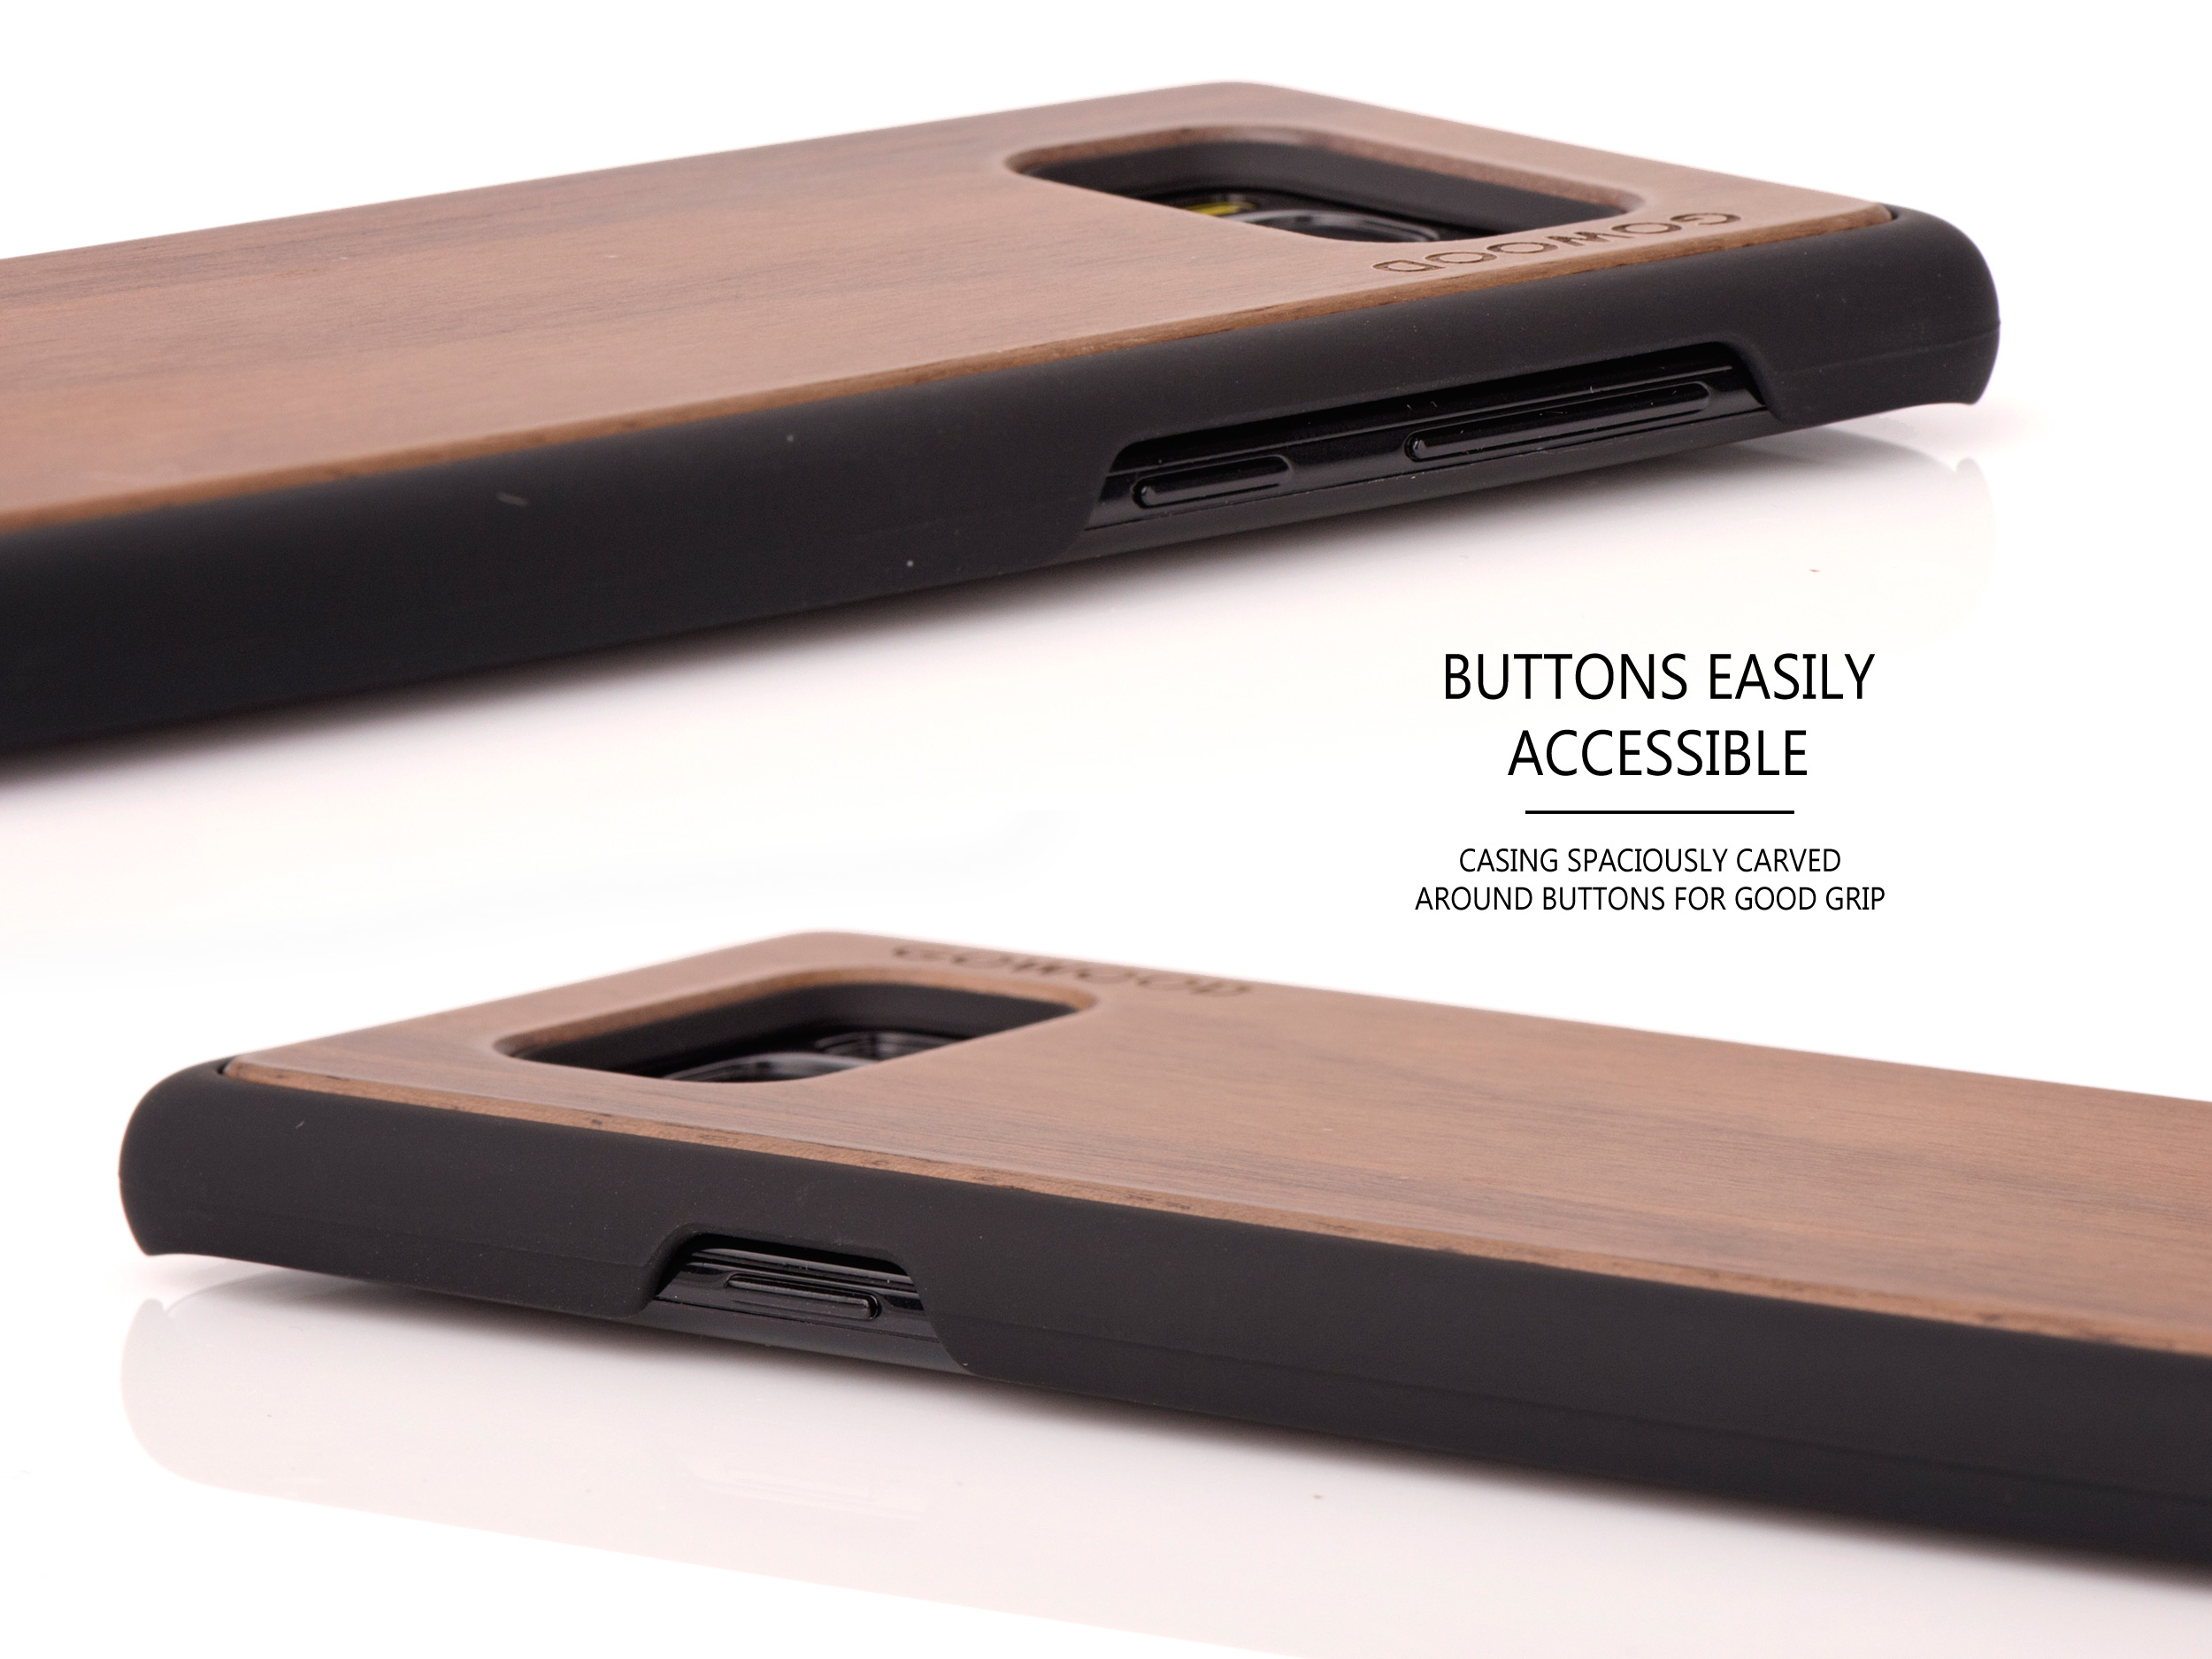 Samsung Galaxy S8 wood case walnut - buttons